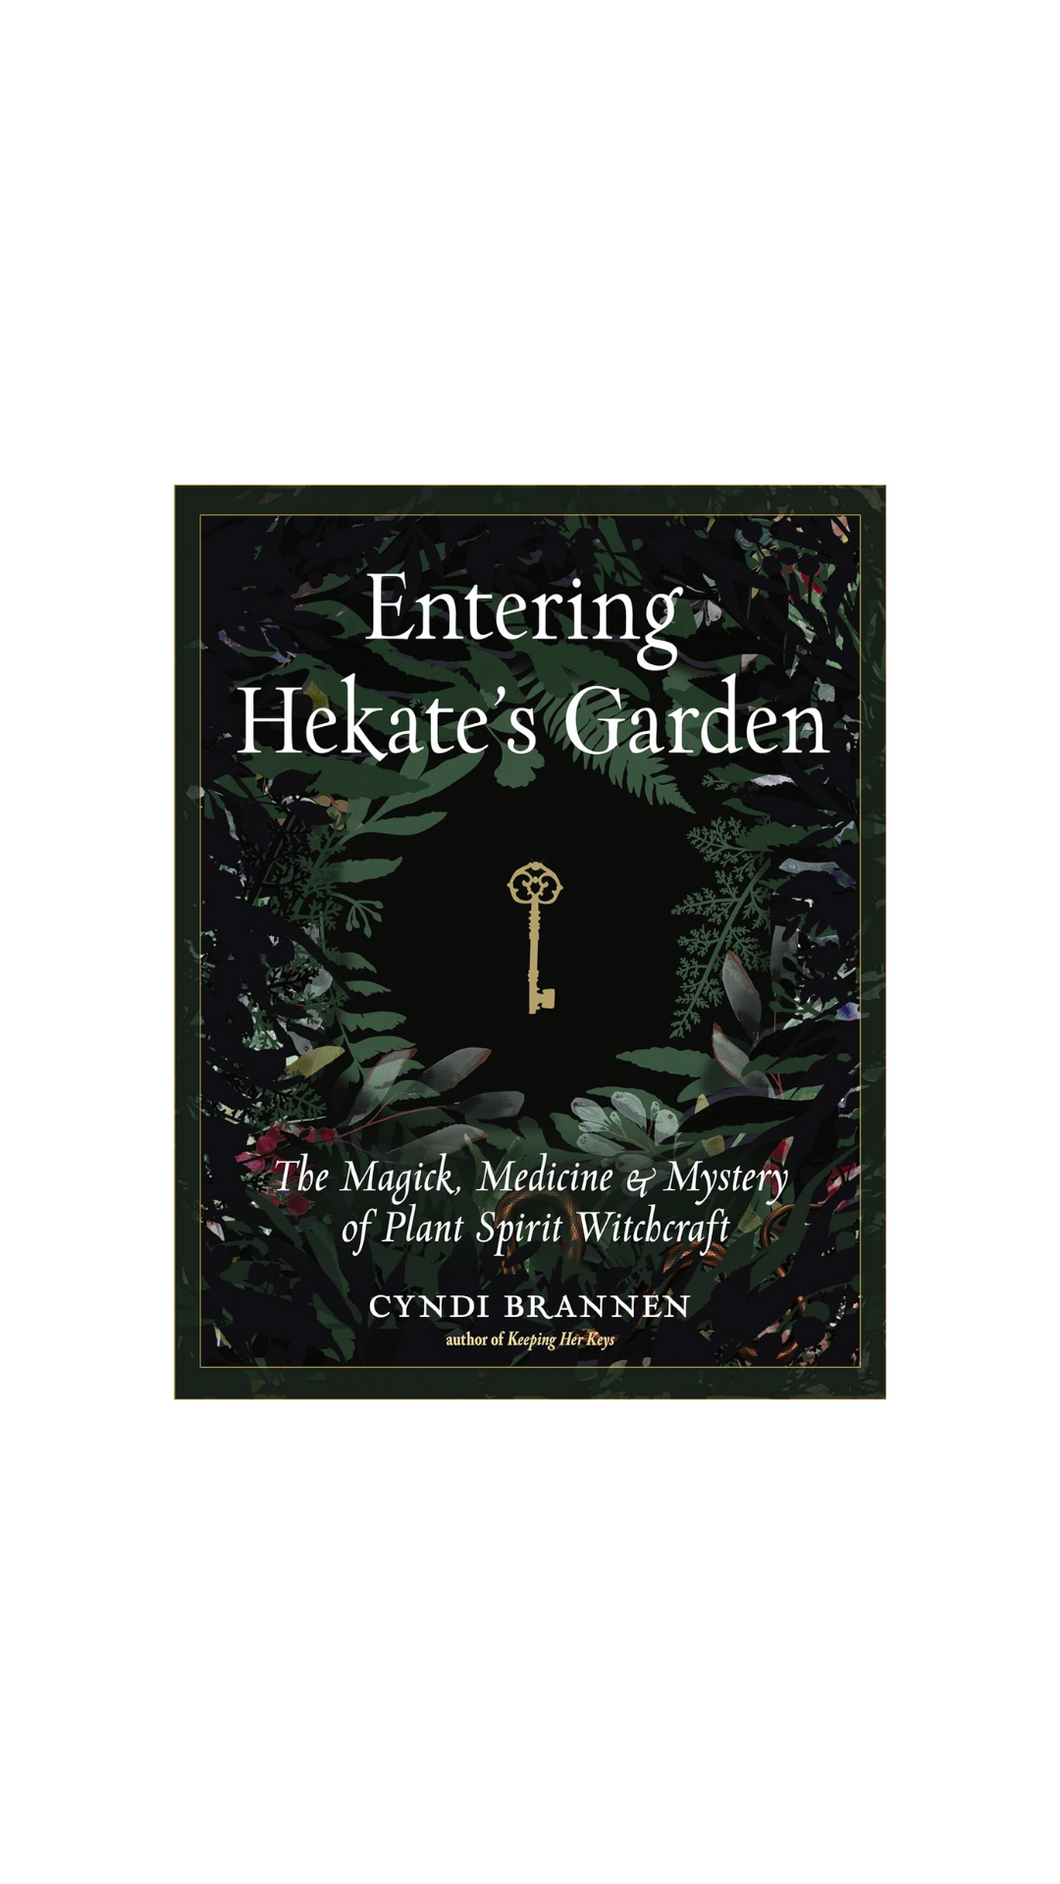 Entering Hecates Garden The Magick Medicine & Mystery of Plant Spirit Witchcraft book by Cyndi Brannen